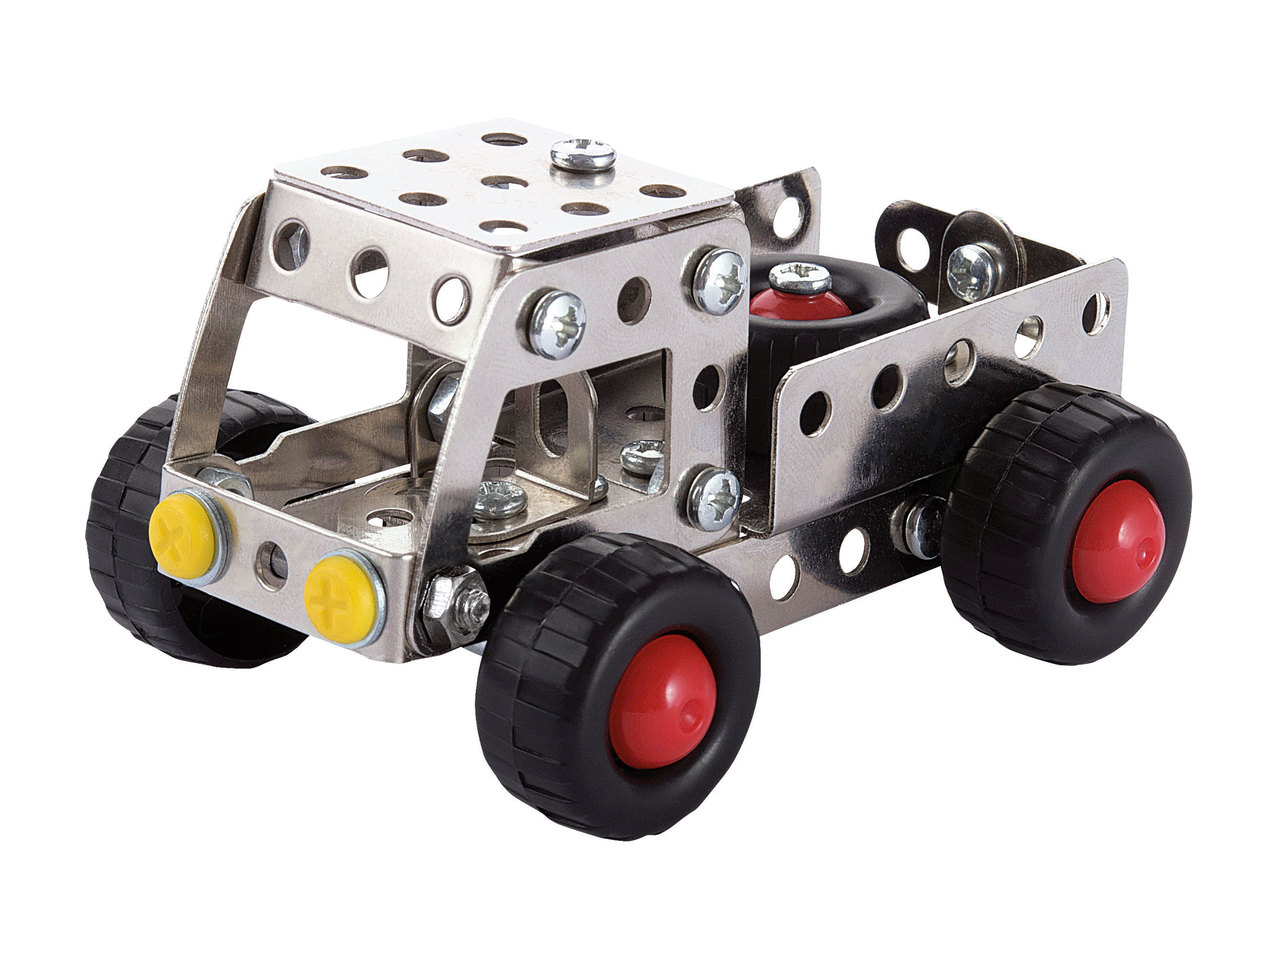 Playtive Vehicle Construction Kit1